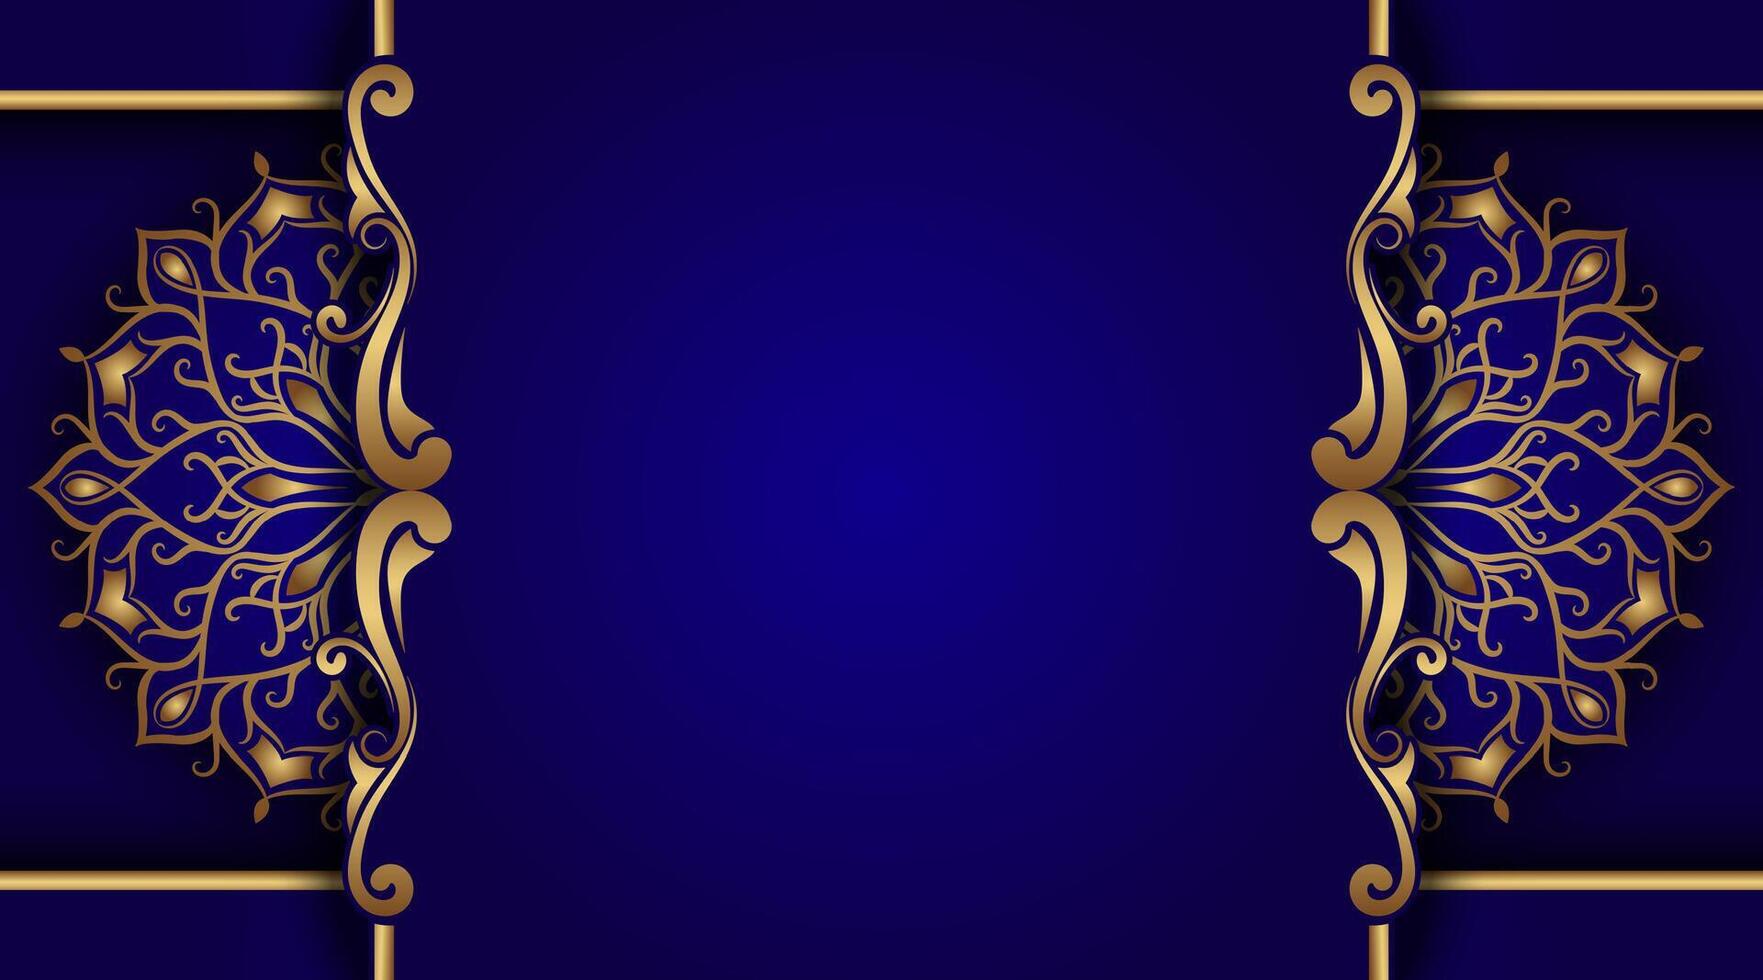 dunkel Blau Hintergrund, mit Gold Mandala Ornamente vektor